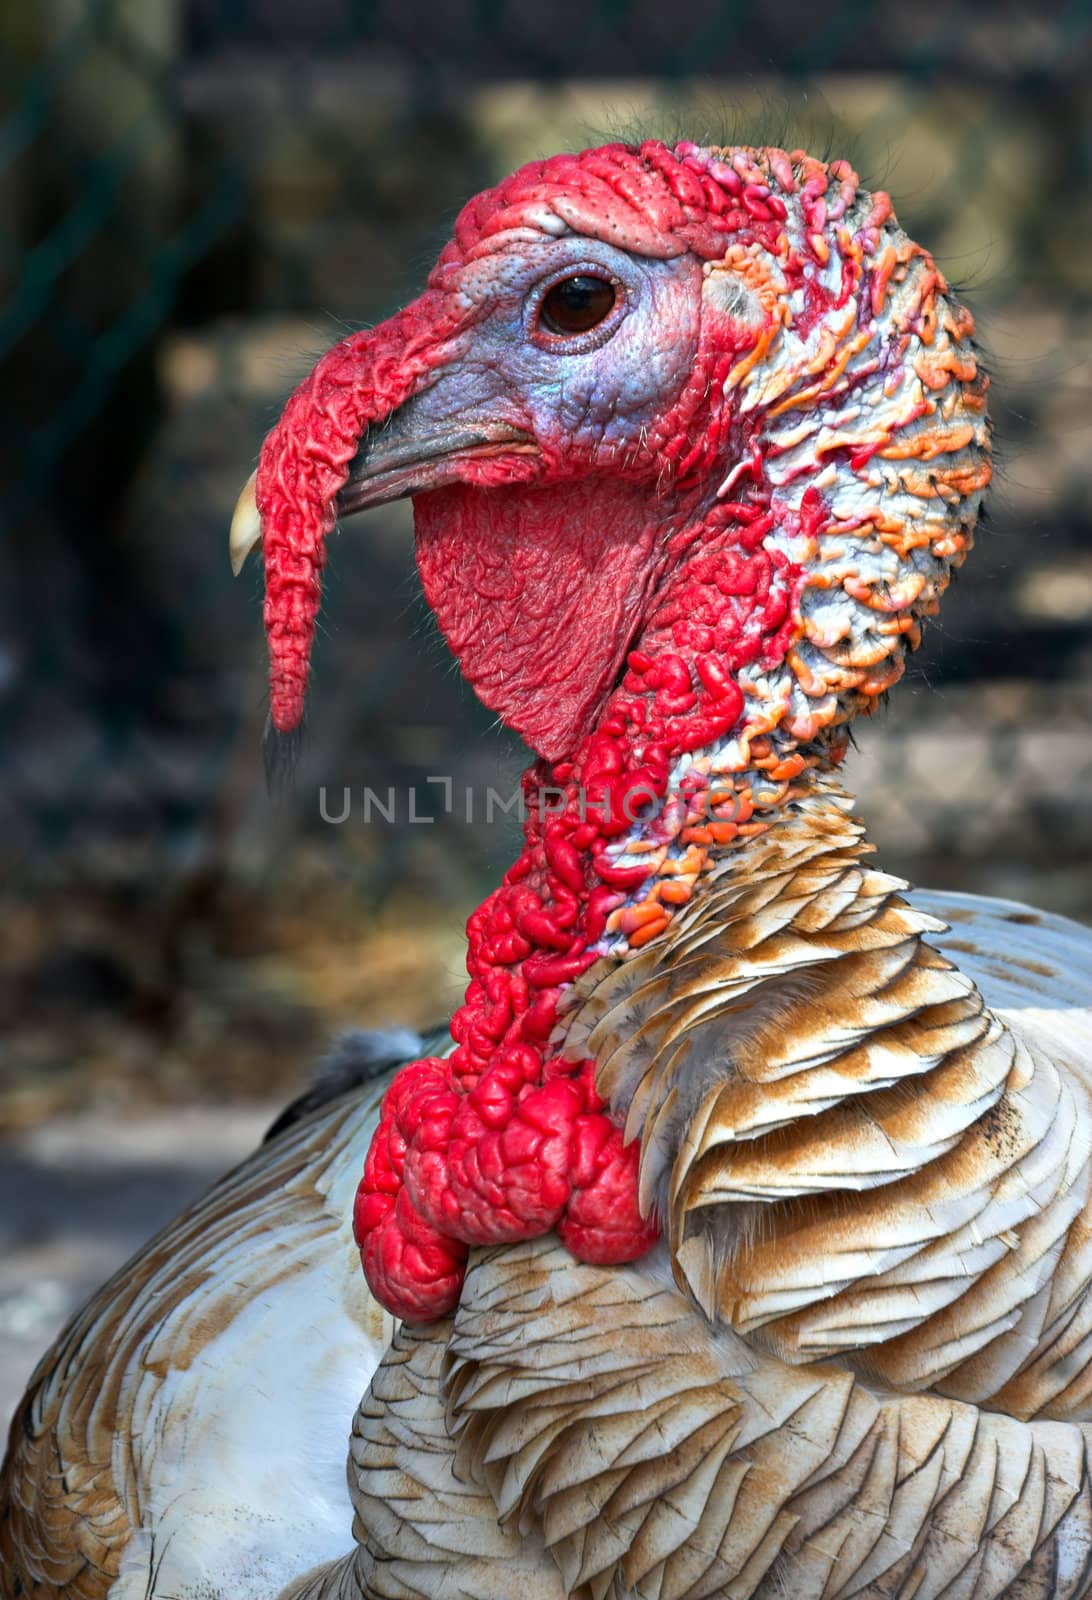 Portrait of a turkey. Photo is in vertical format.